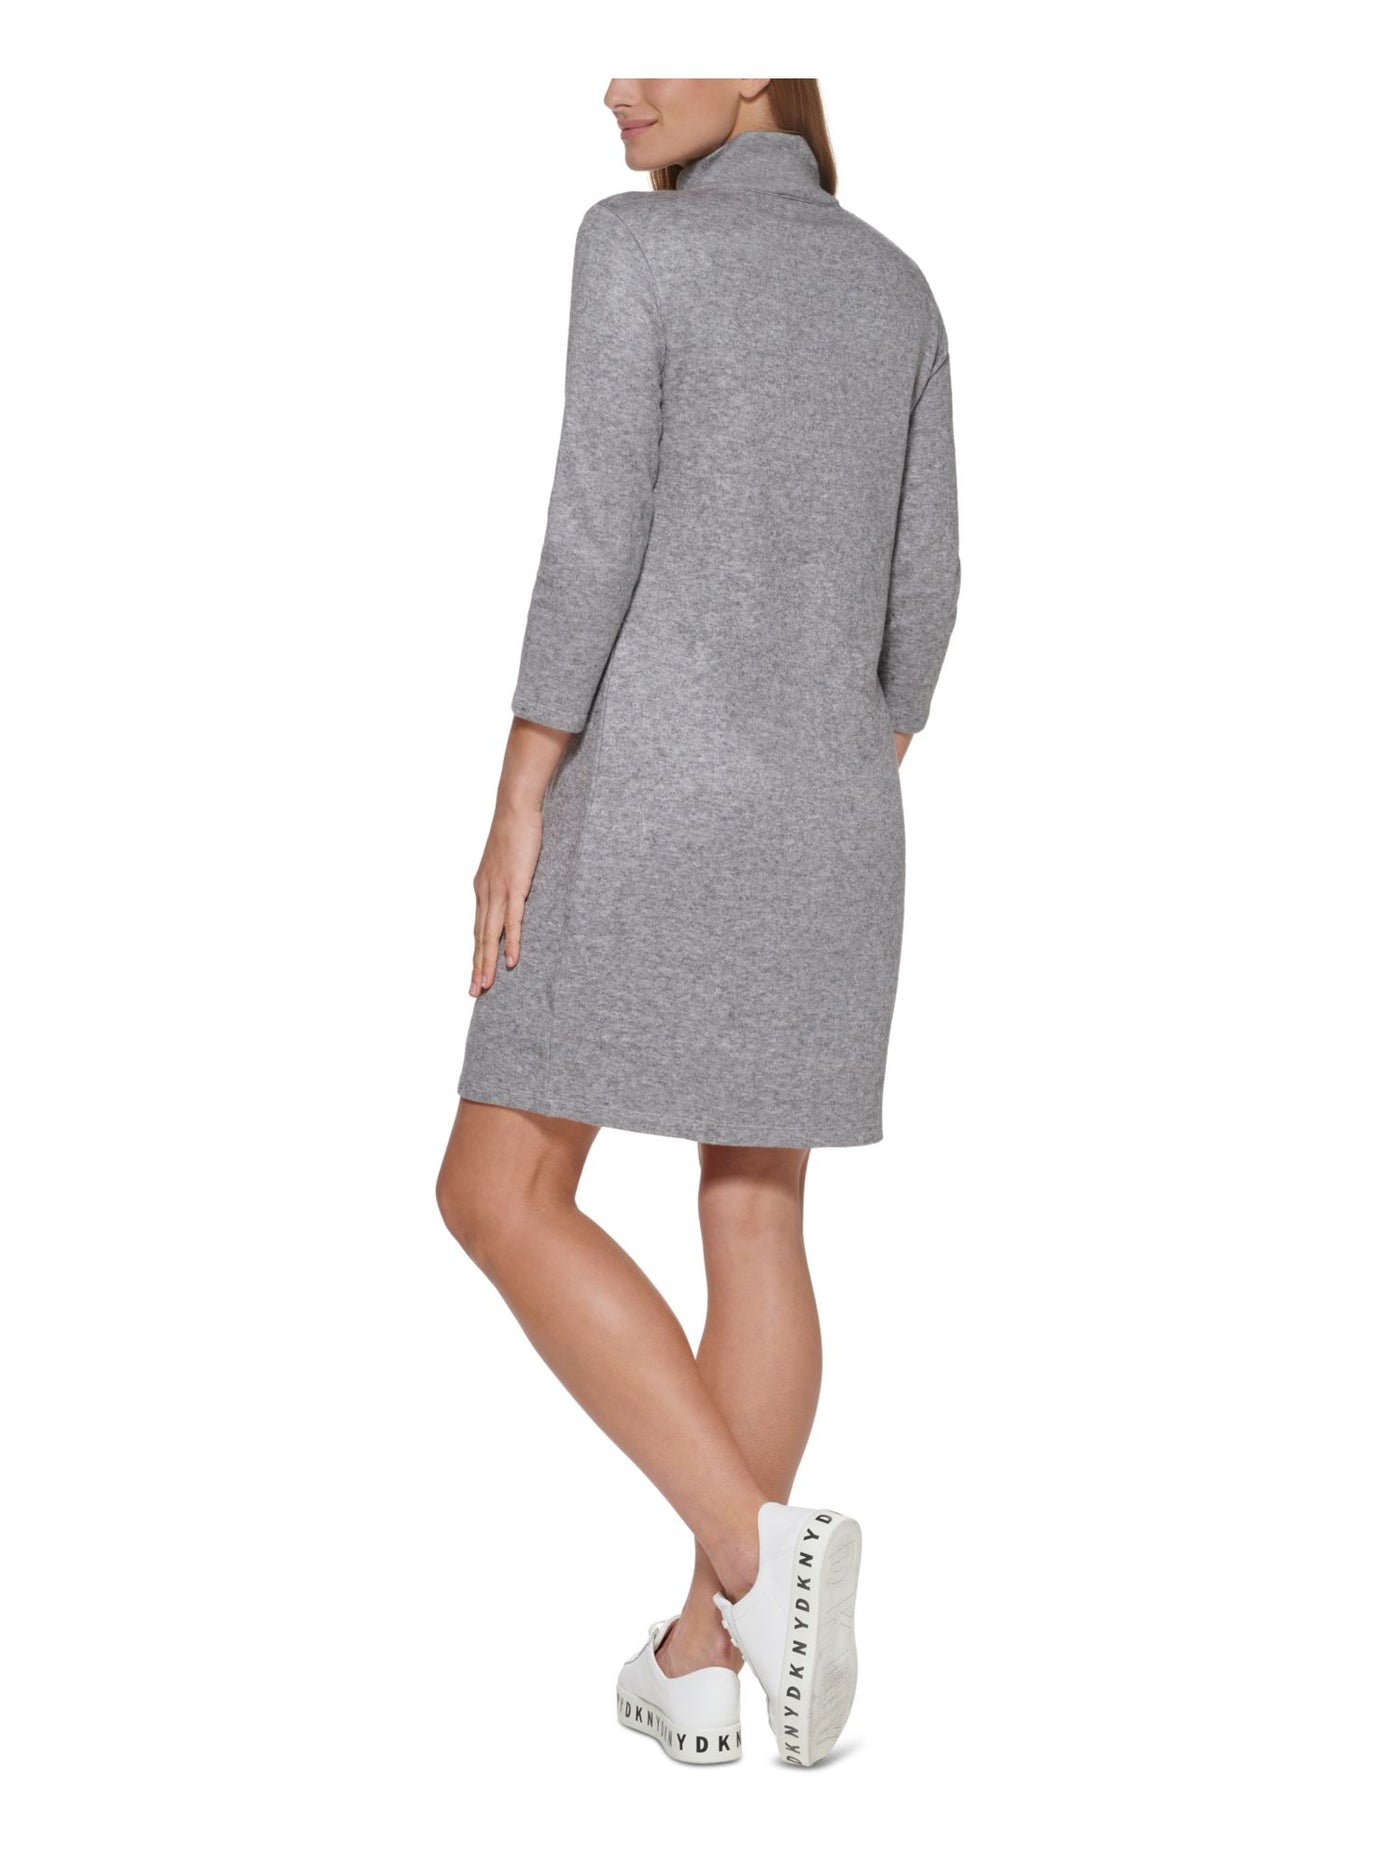 DKNY Womens Gray Knit Zippered Quarter Zip Heather Long Sleeve Mock Neck Above The Knee Sweater Dress M